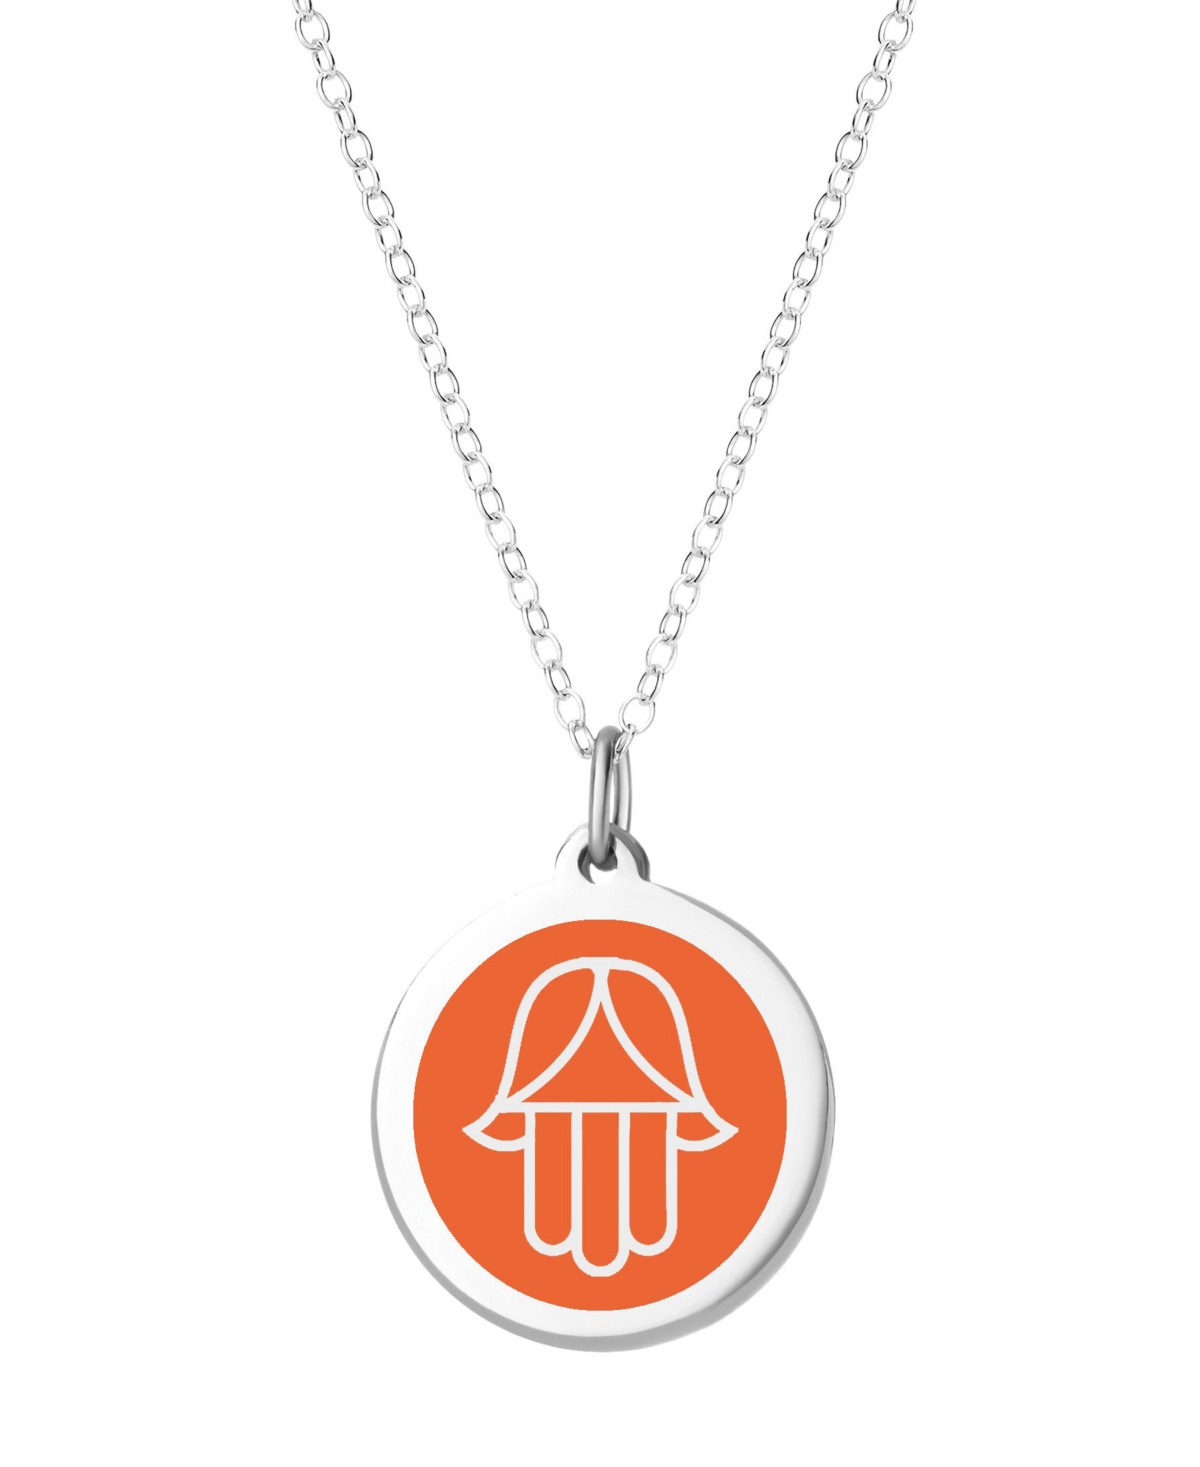 Auburn Jewelry Hamsa Pendant Necklace In Sterling Silver And Enamel, 16" + 2" Extender In Orange